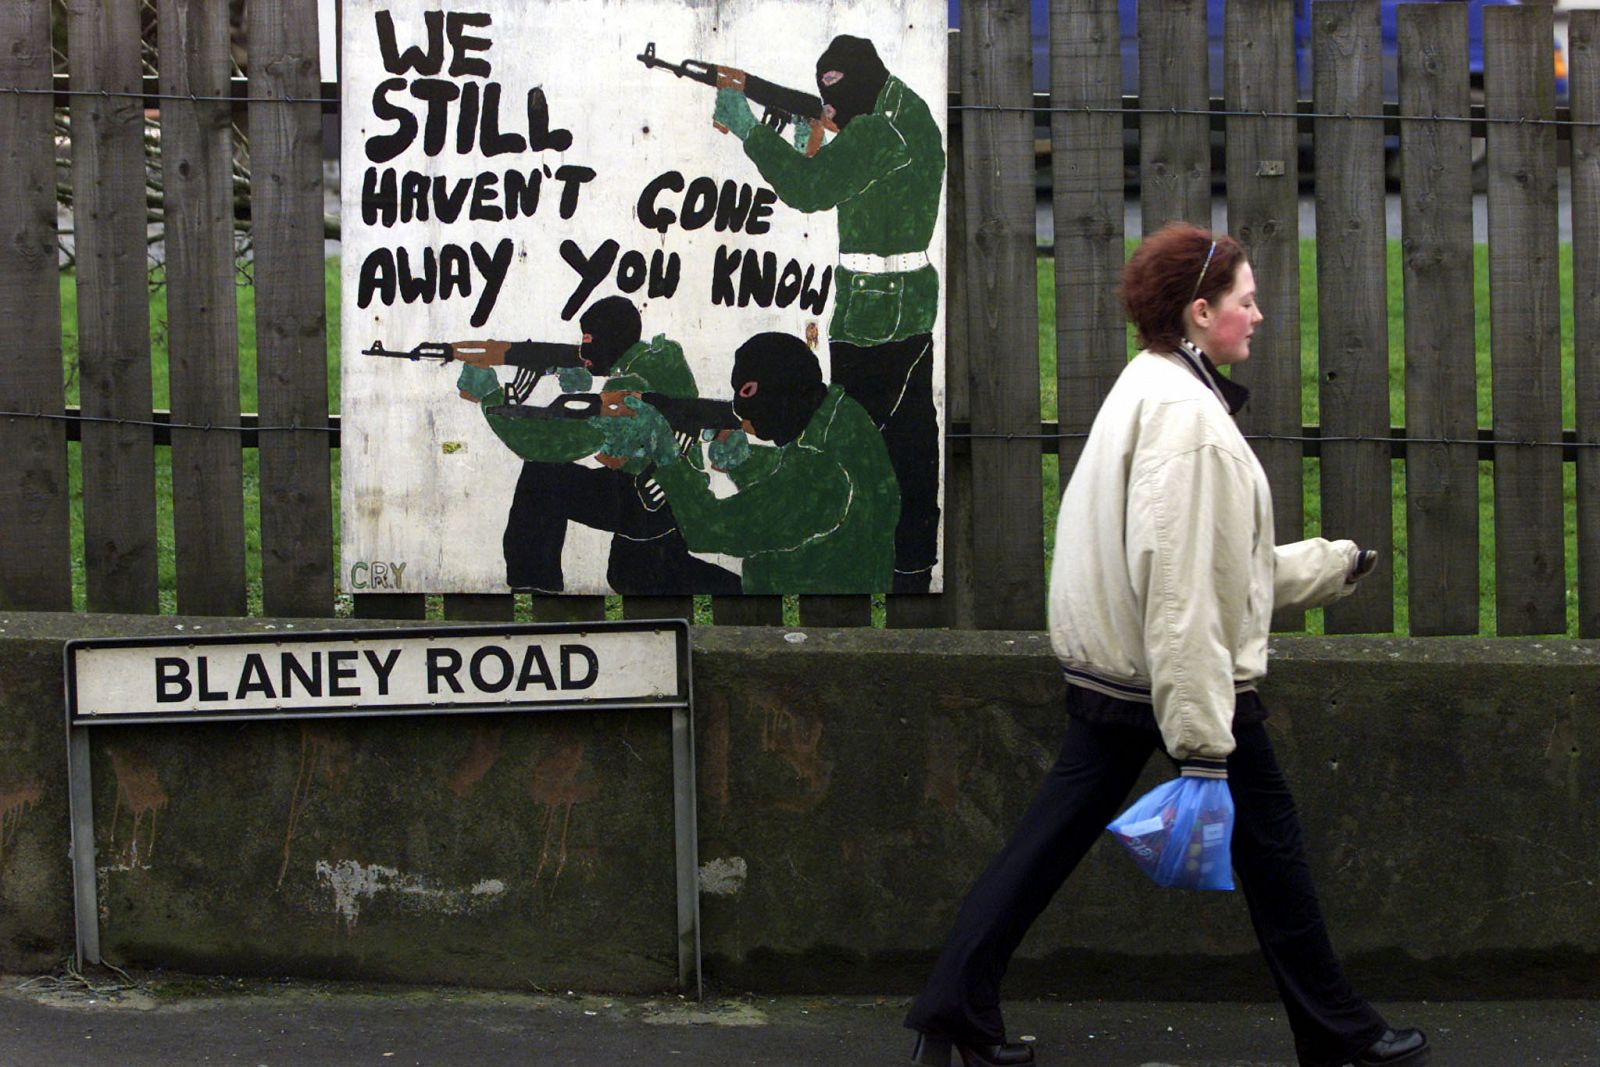 GRAFFITI SUPPORTING THE IRA APPEARS IN CROSSMAGLEN.